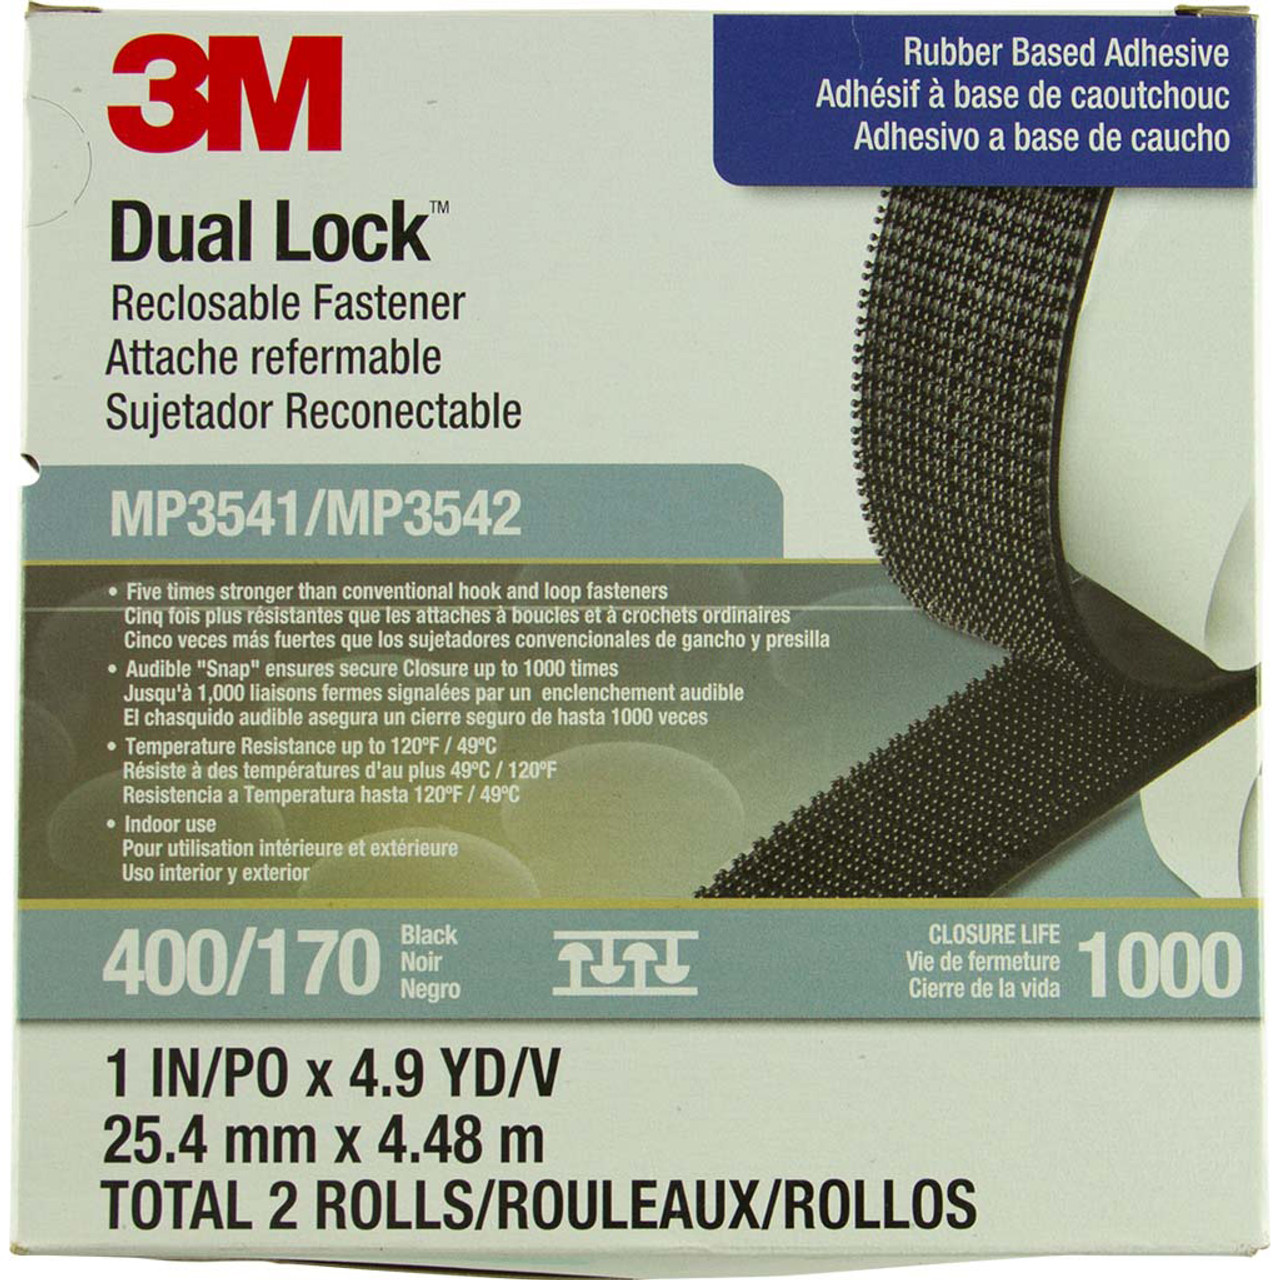 Dual Lock VHB Acrylic PSA